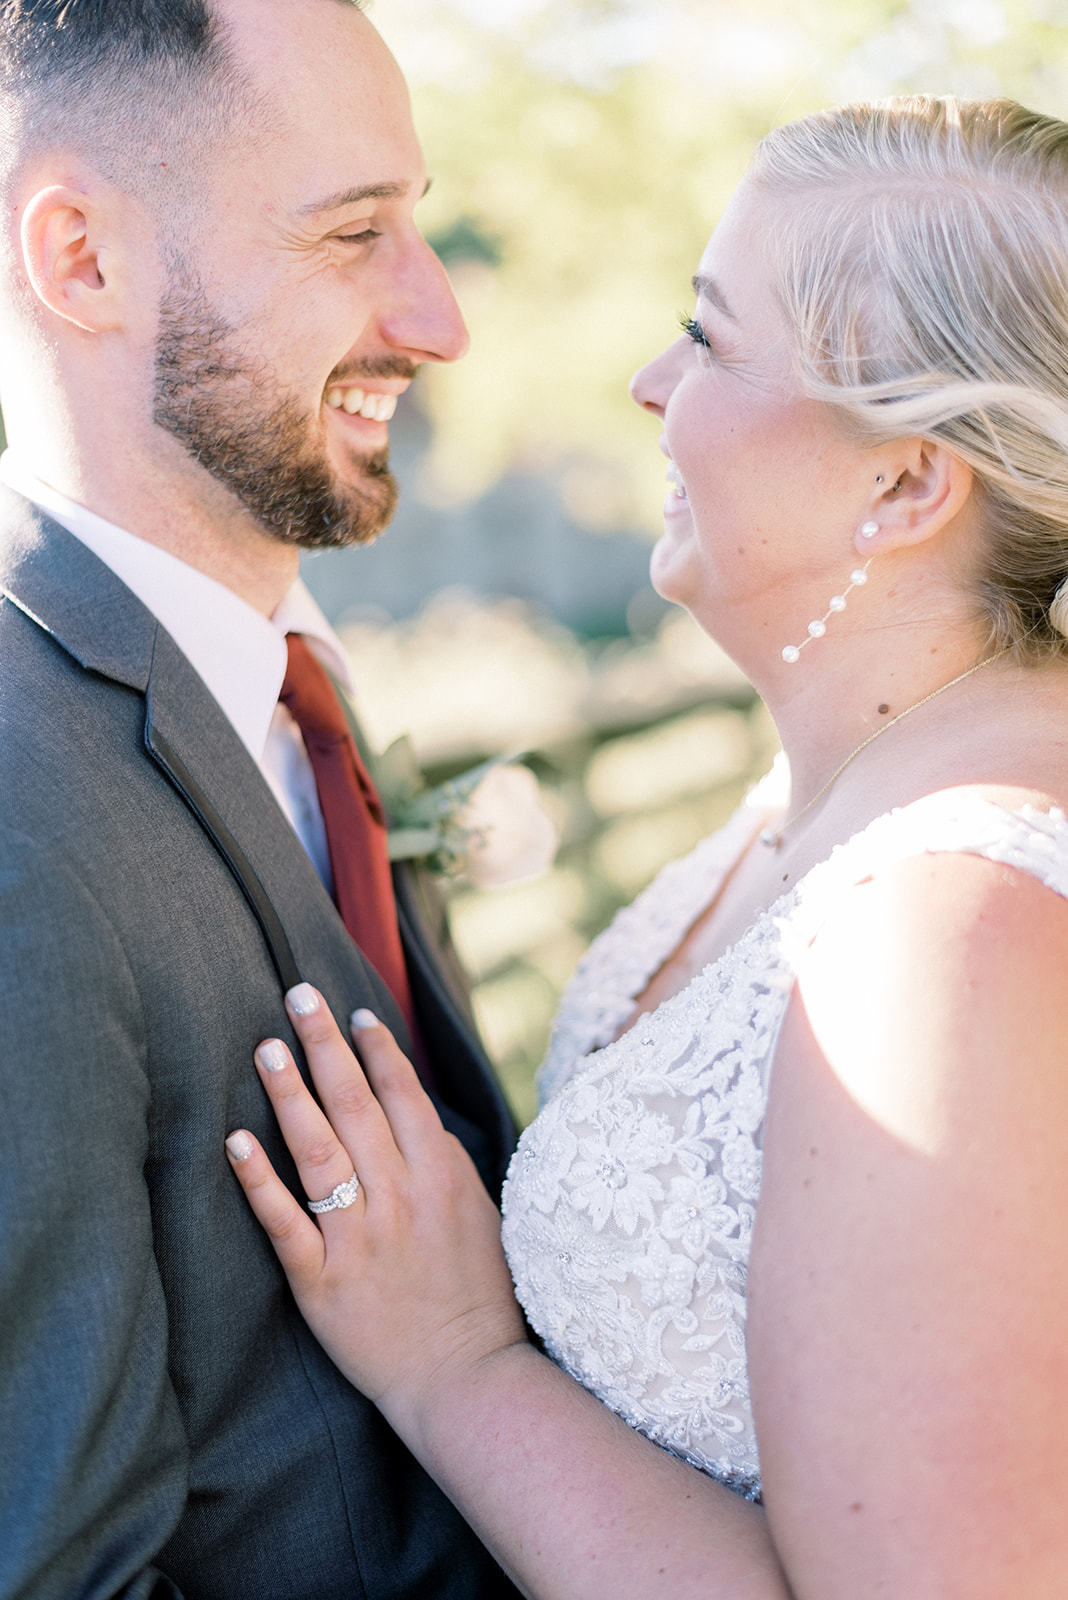 Pennsylvania wedding photographer captures bride and groom embracing